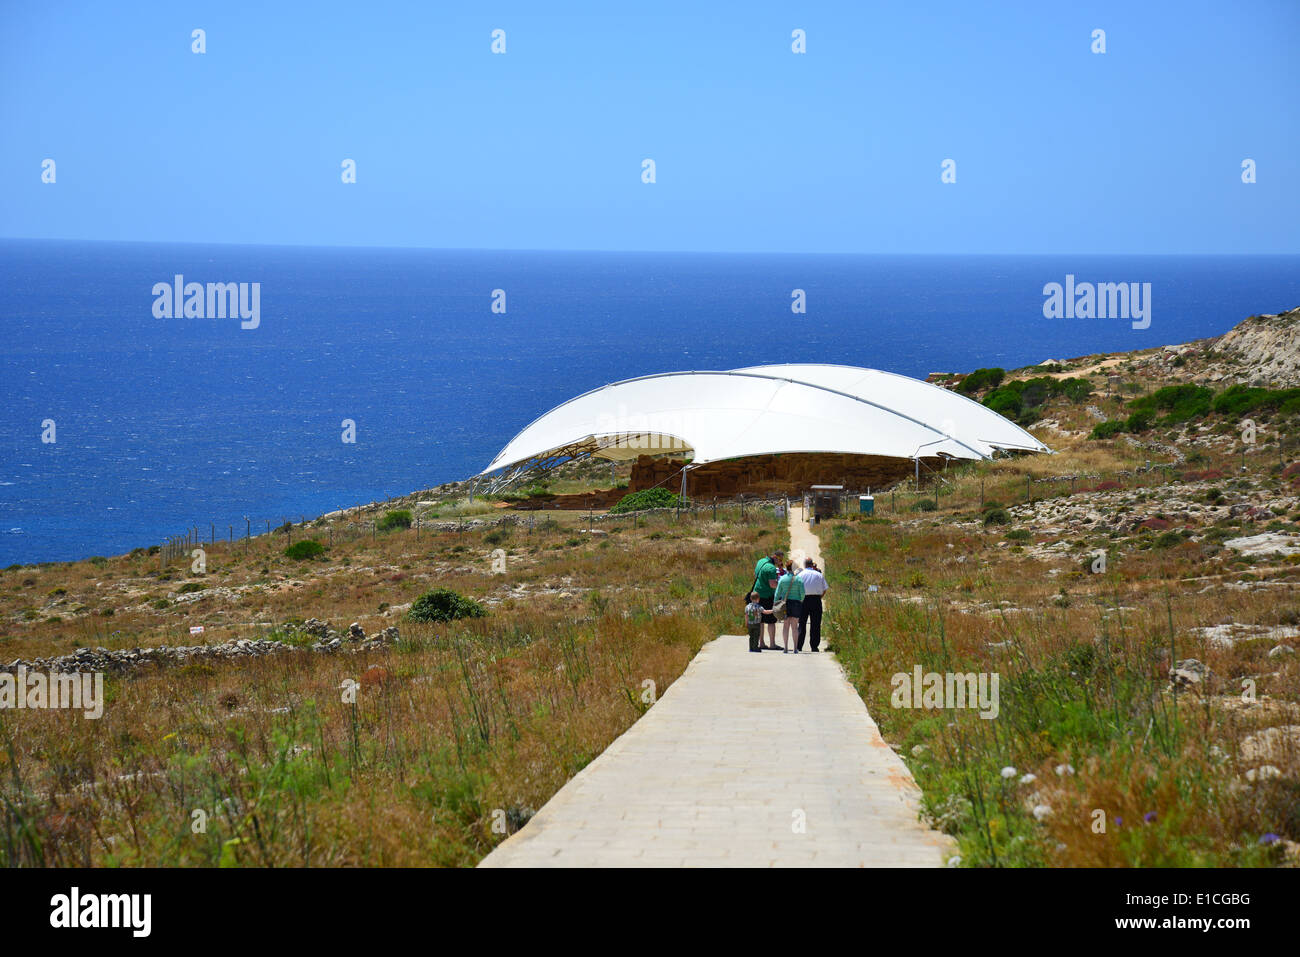 Mnajdra Tempel, Ħaġar Qim & Mnajdra archäologischer Park, Qrendi, südöstlichen Viertel, Malta Xlokk Region, Republik Malta Stockfoto